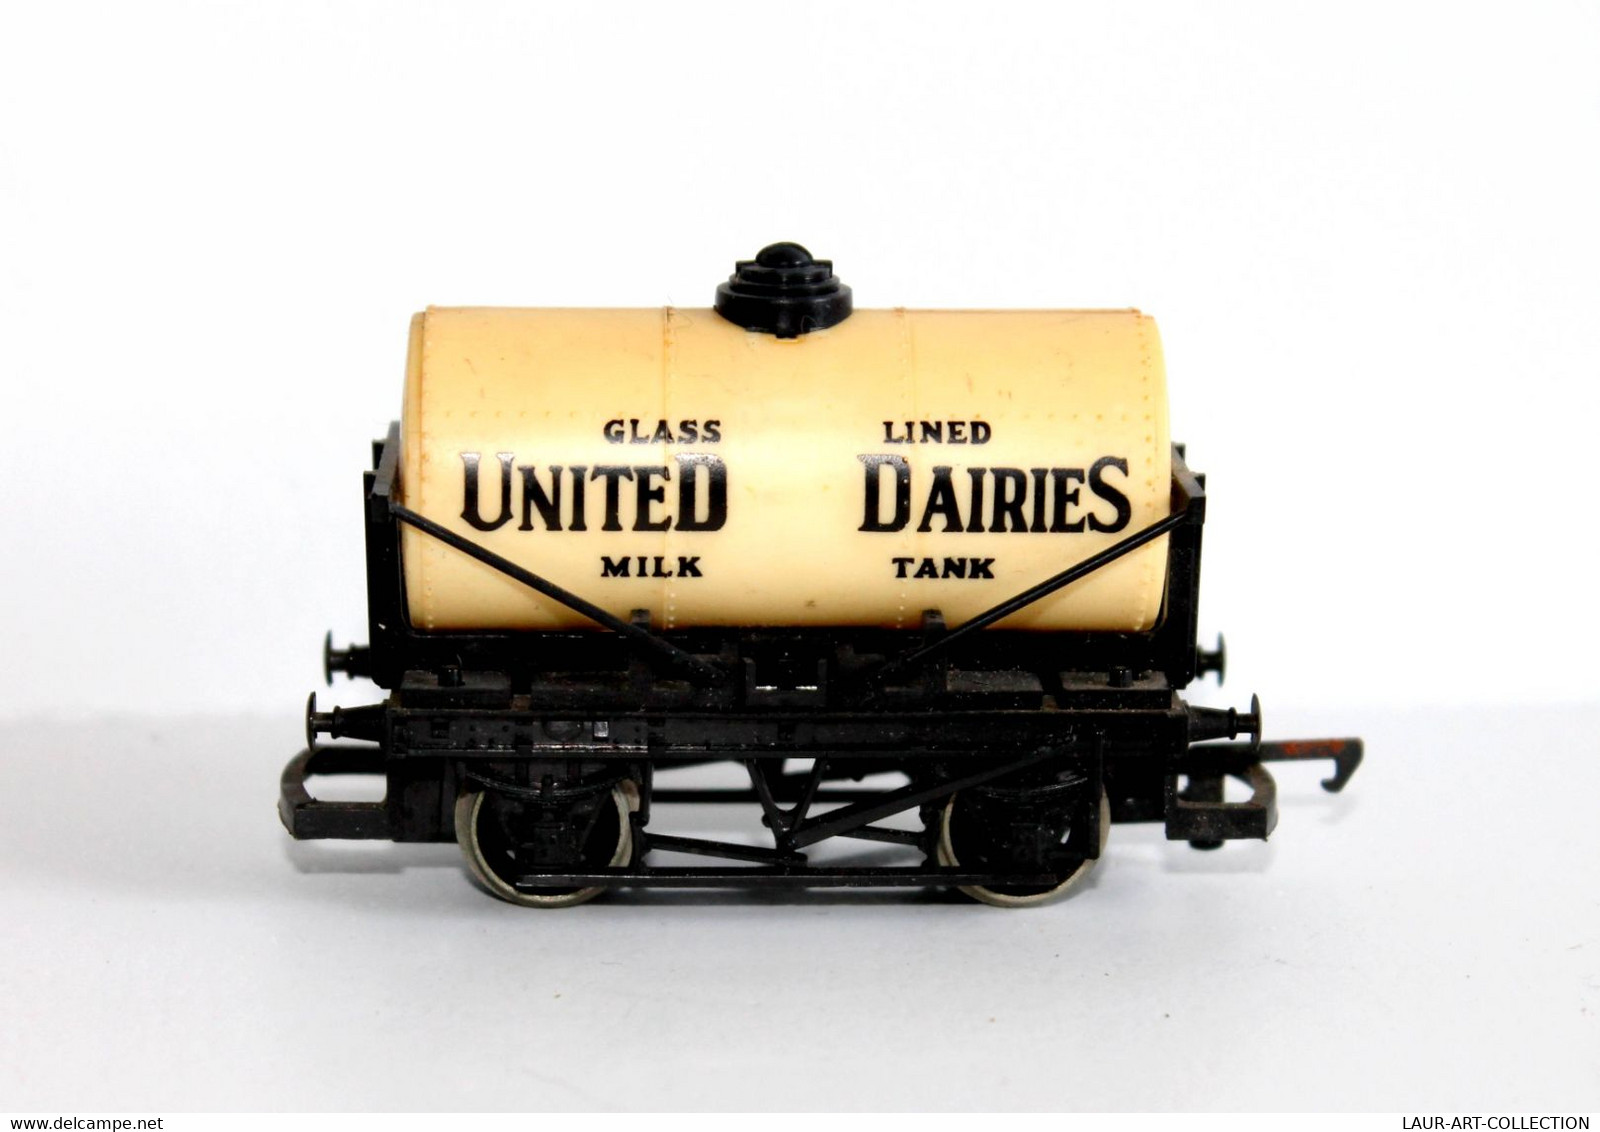 HORNBY RAILWAYS - WAGON CITERNE MARCHANDISE GLASS UNITED MILK LINED DAIRIES TANK / TRAIN CHEMIN DE FER     (2304.84) - Goods Waggons (wagons)